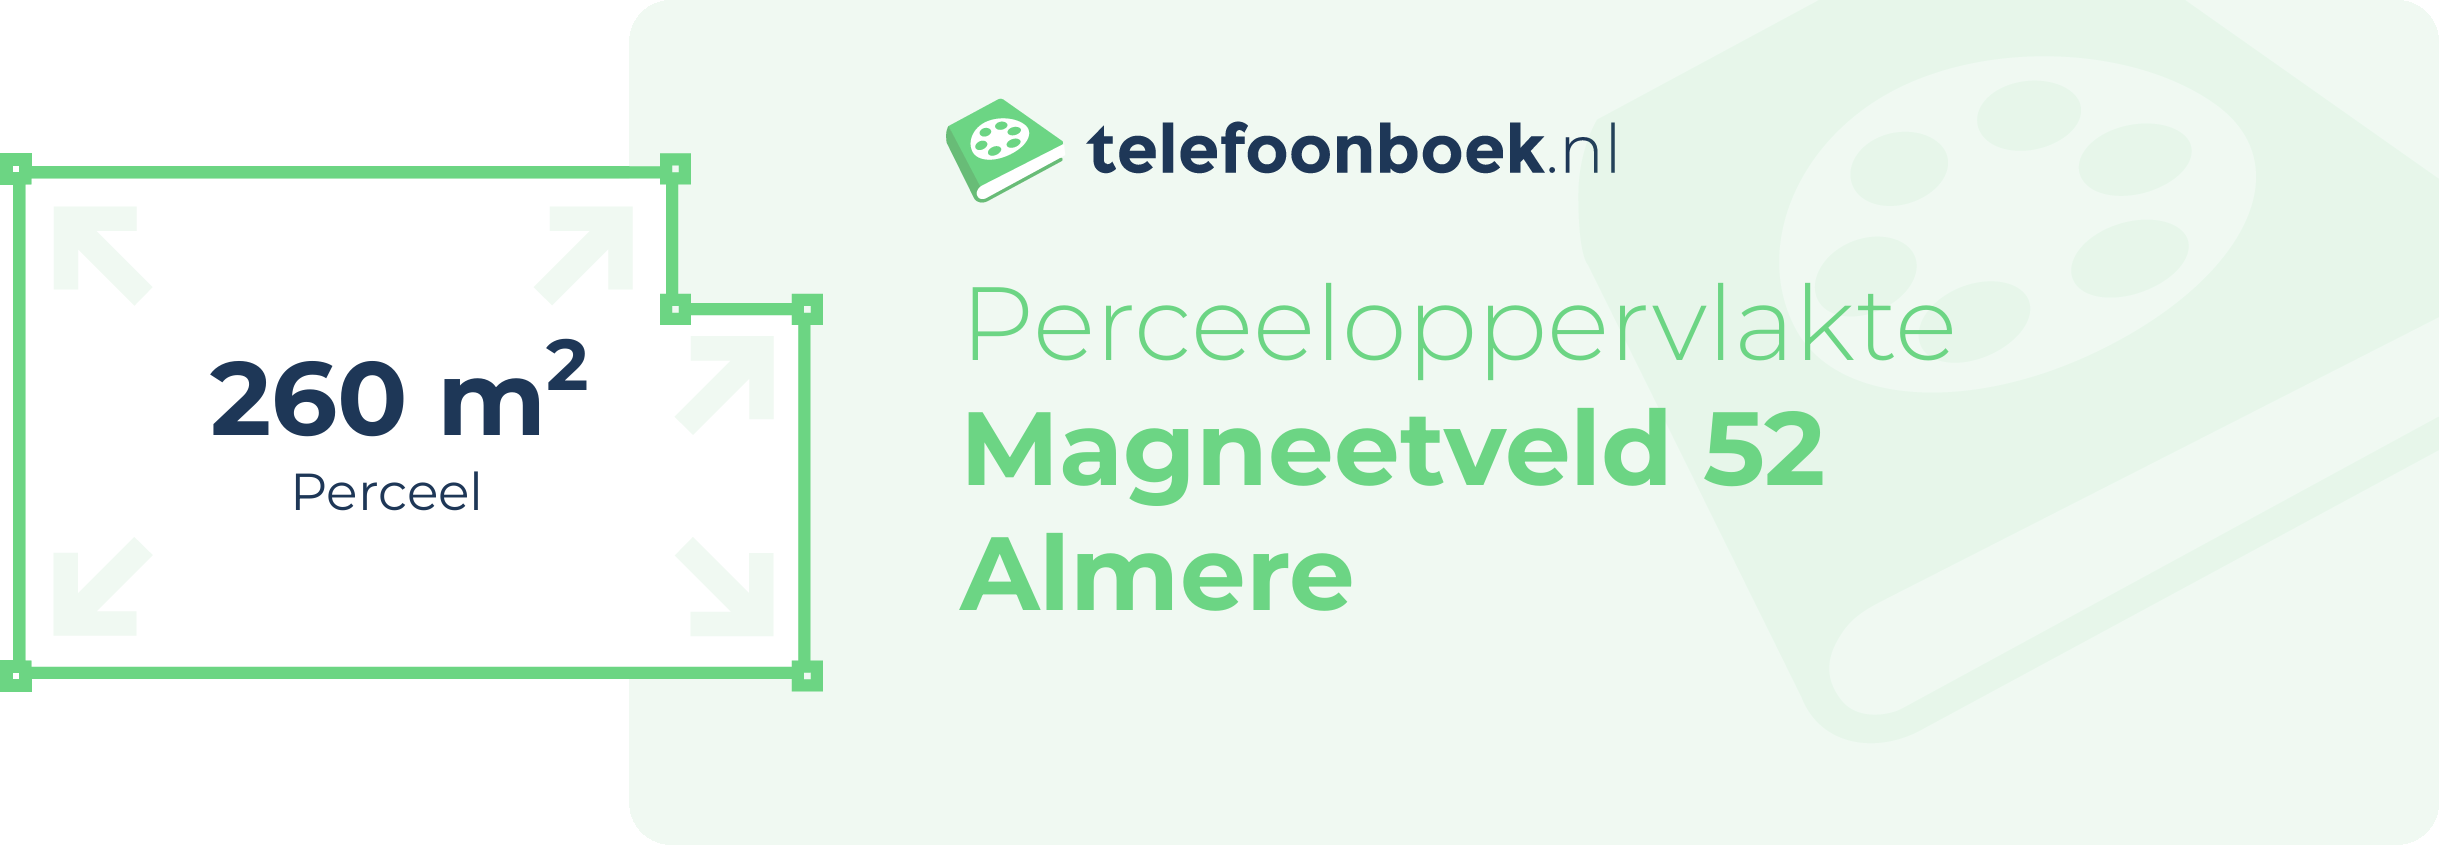 Perceeloppervlakte Magneetveld 52 Almere